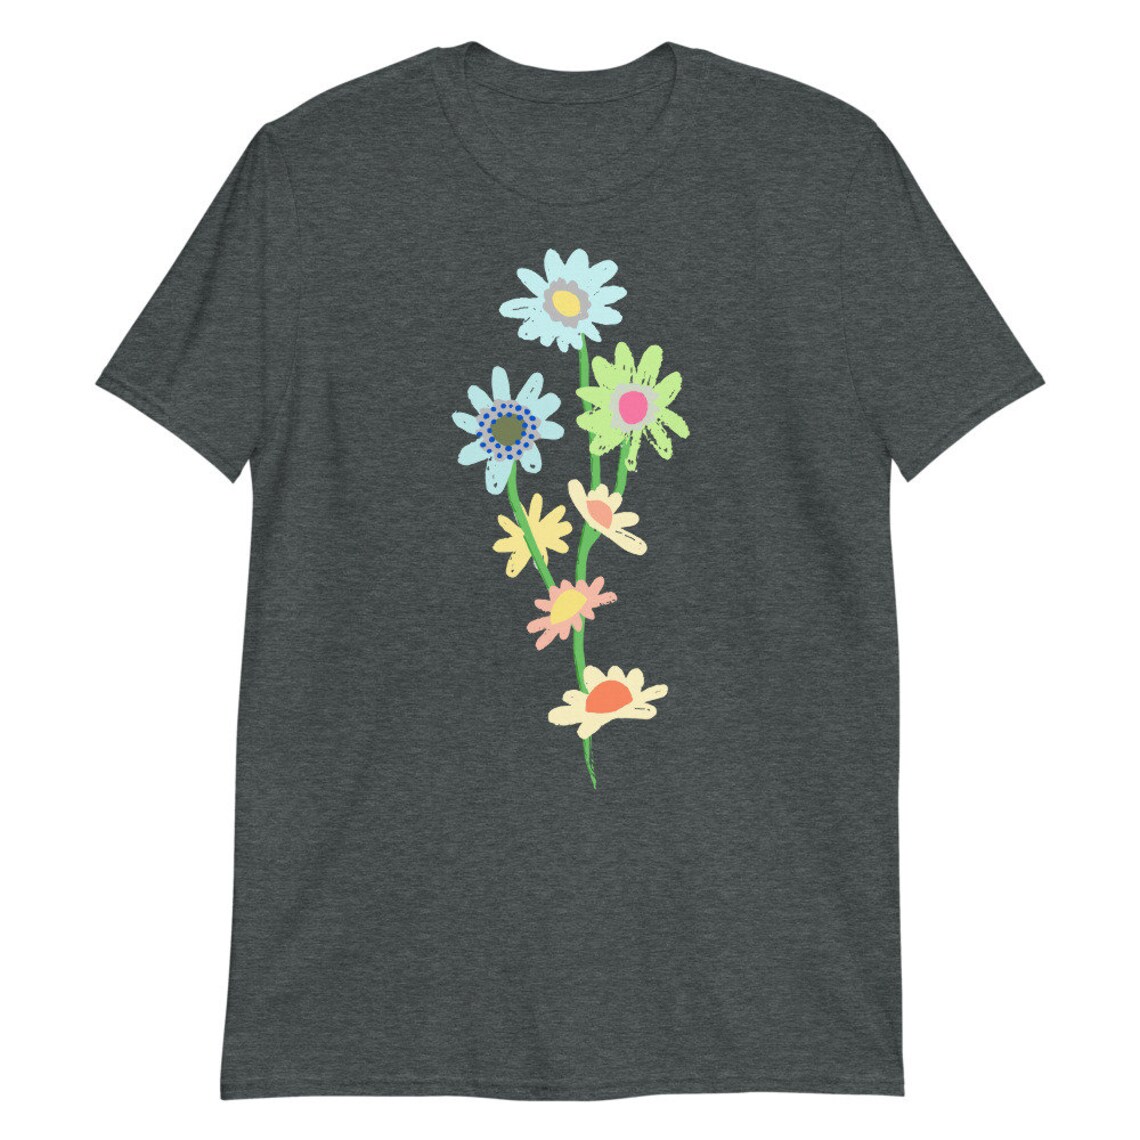 Artsy Daisy Shirt // Women's Clothing Floral T-Shirt - Etsy.de